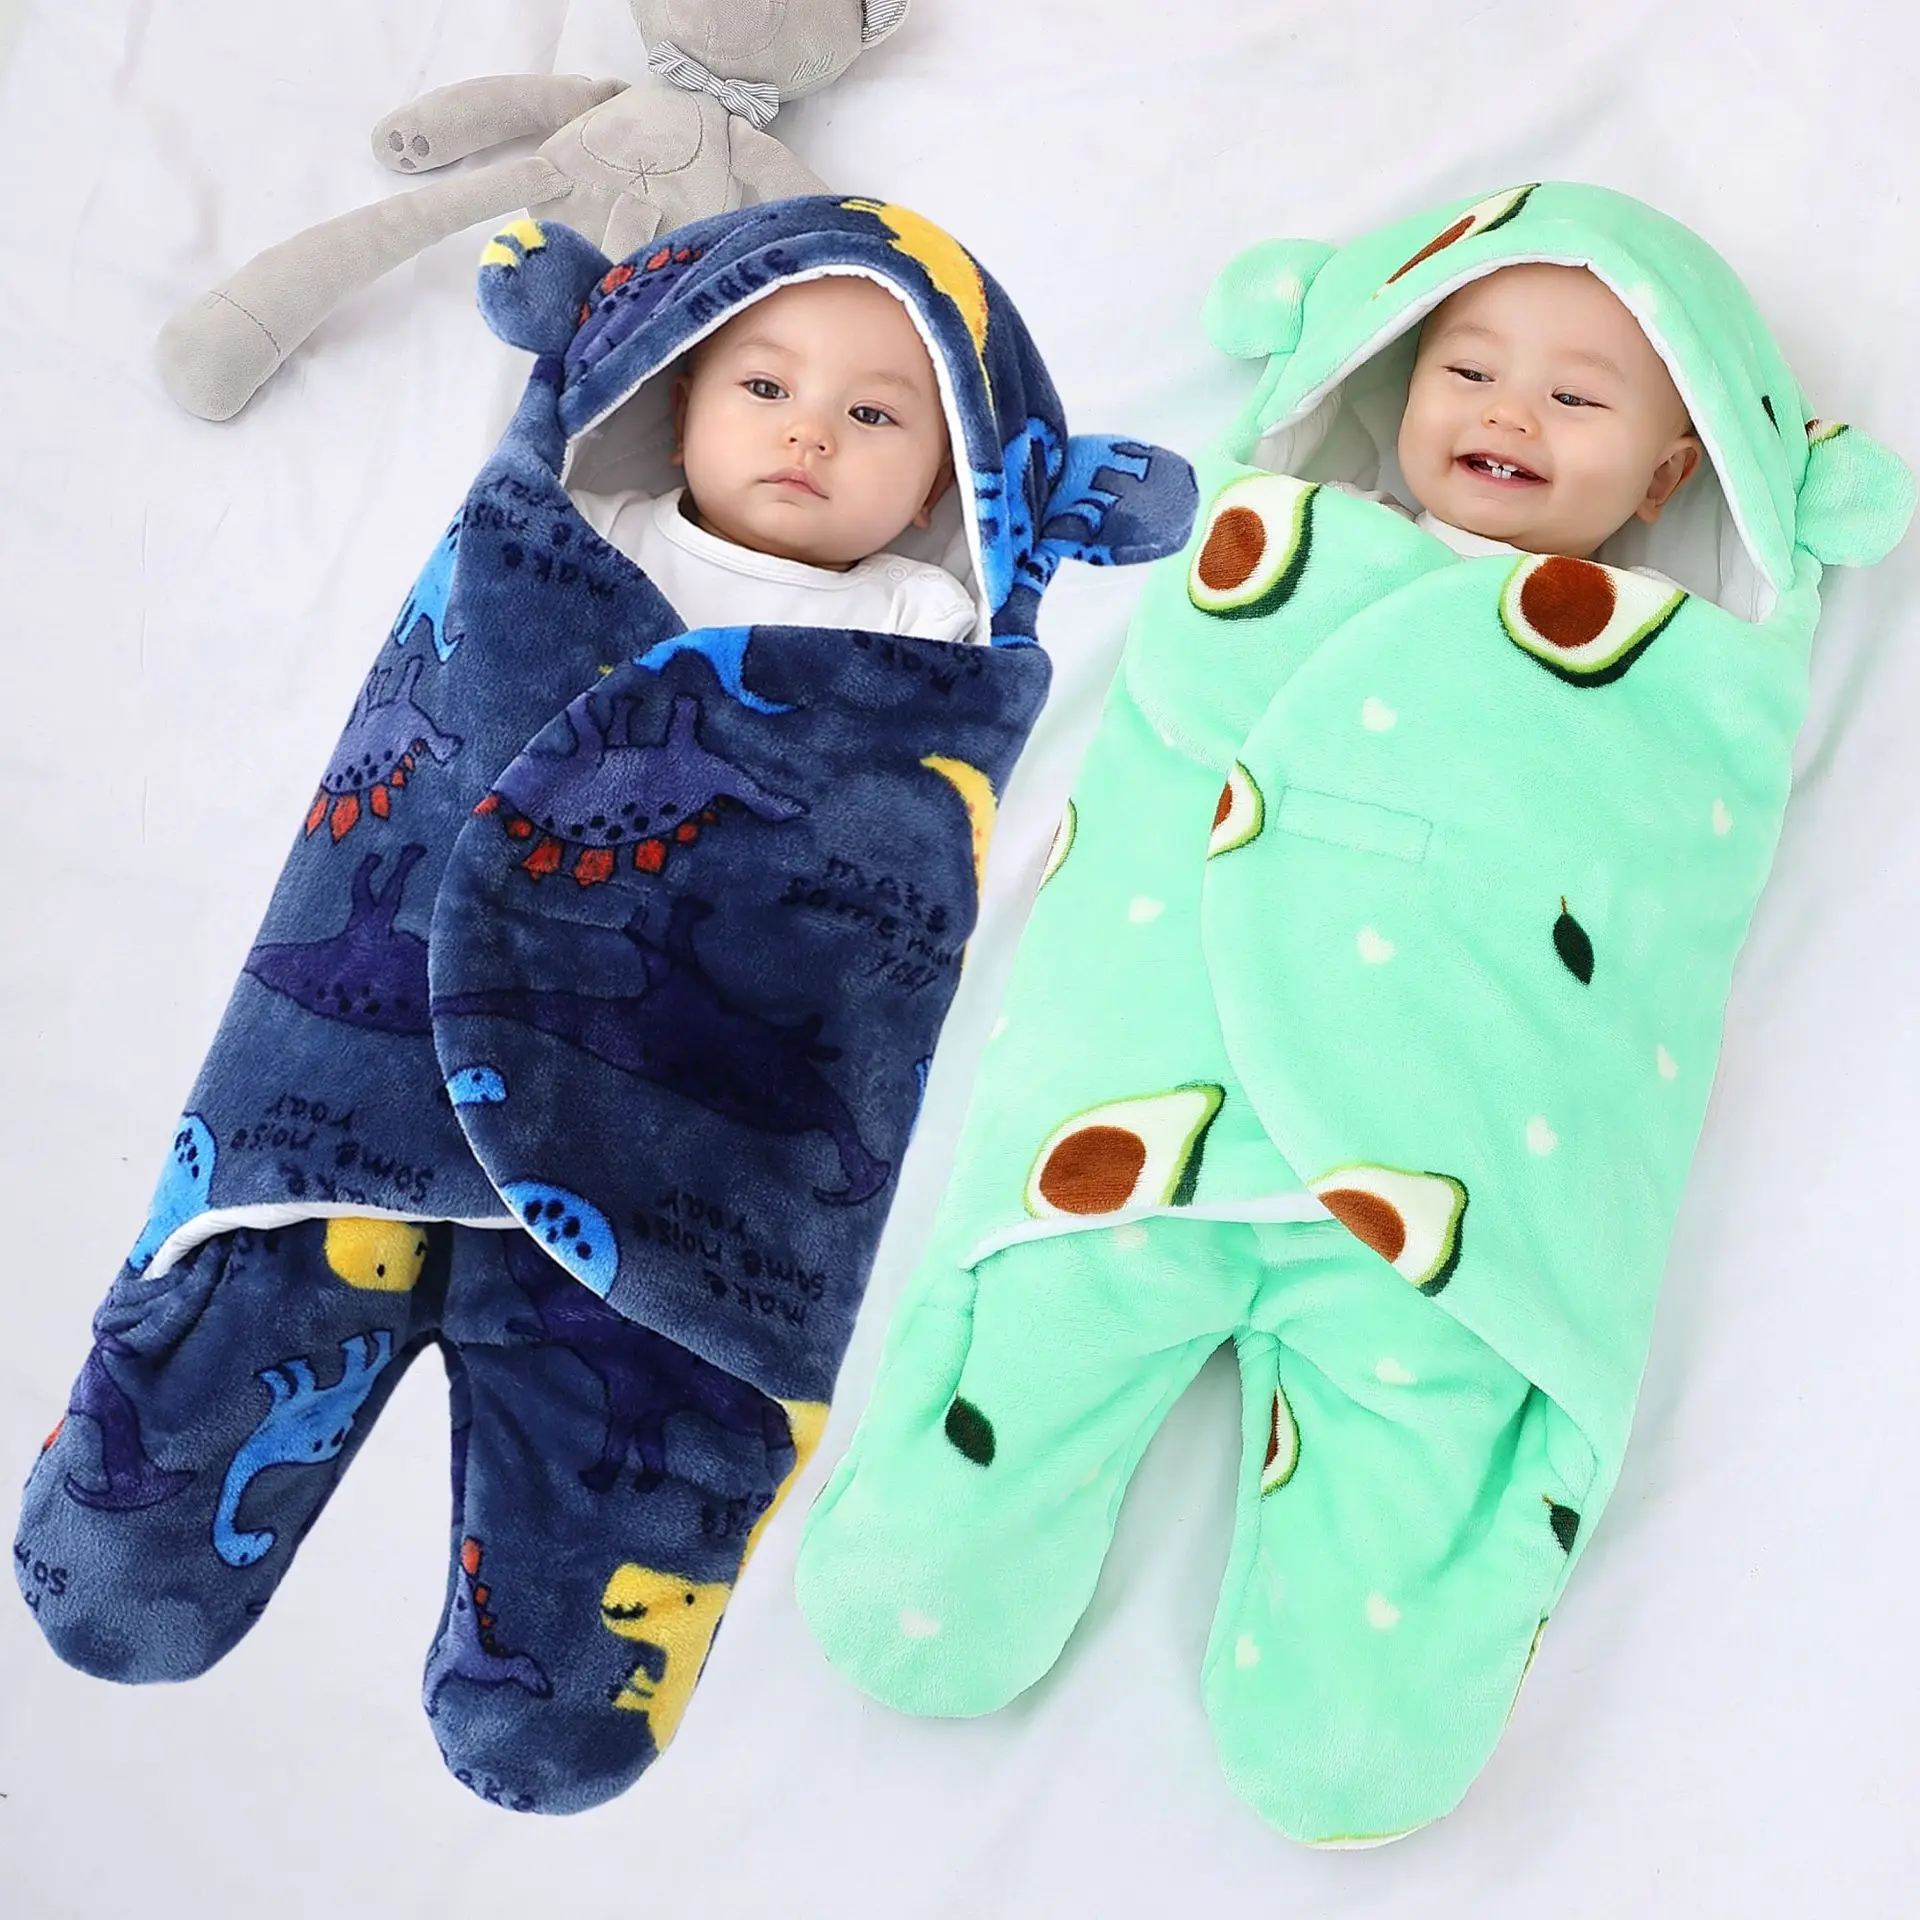 

Newborn Baby Wrap Blankets Autumn Winter Soft Cotton Baby Sleeping Bags Flannel Fleece Cocoon For Babies New Born Sleepsack 0-9M